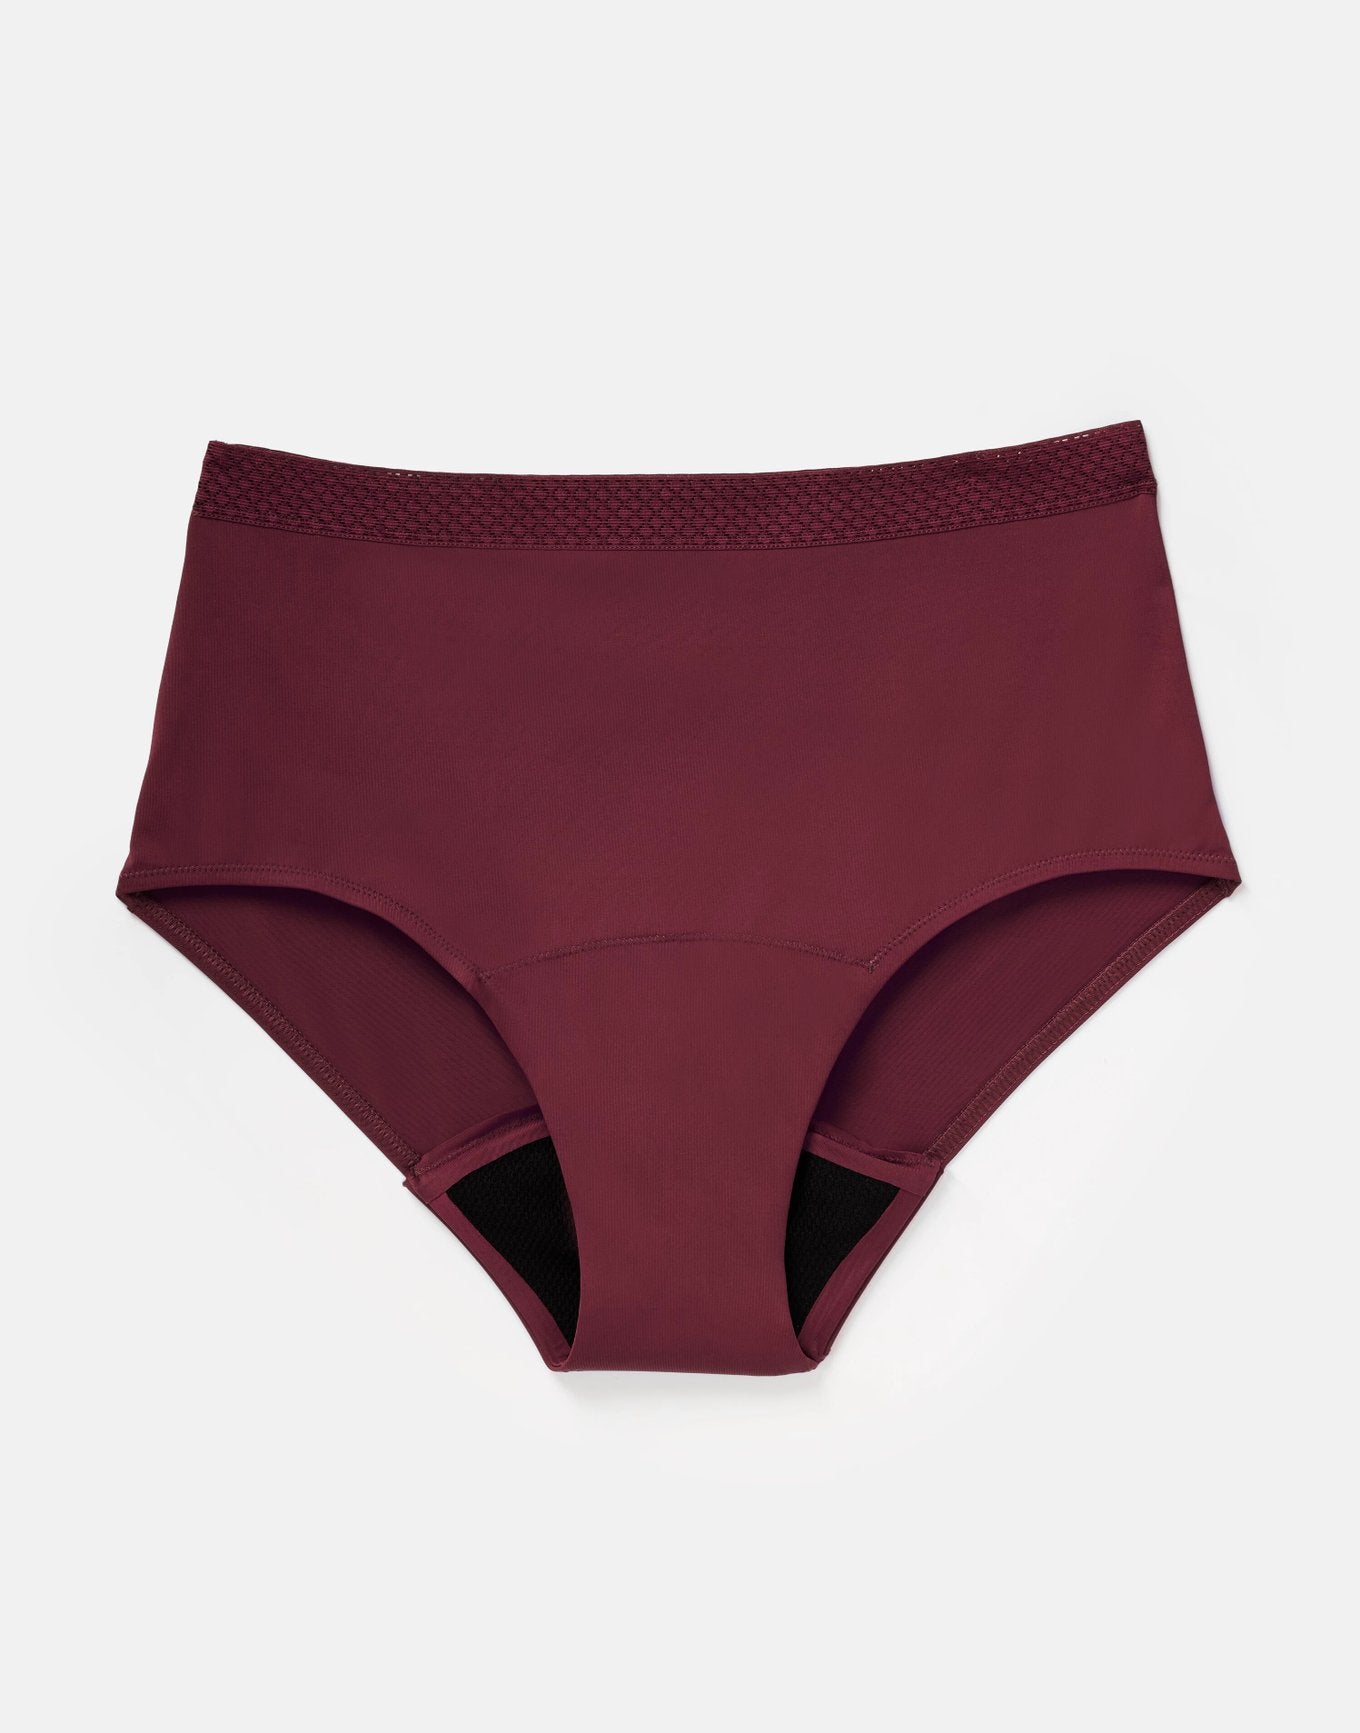 Joyja Jess period-proof panty in color Windsor Wine and shape high waisted